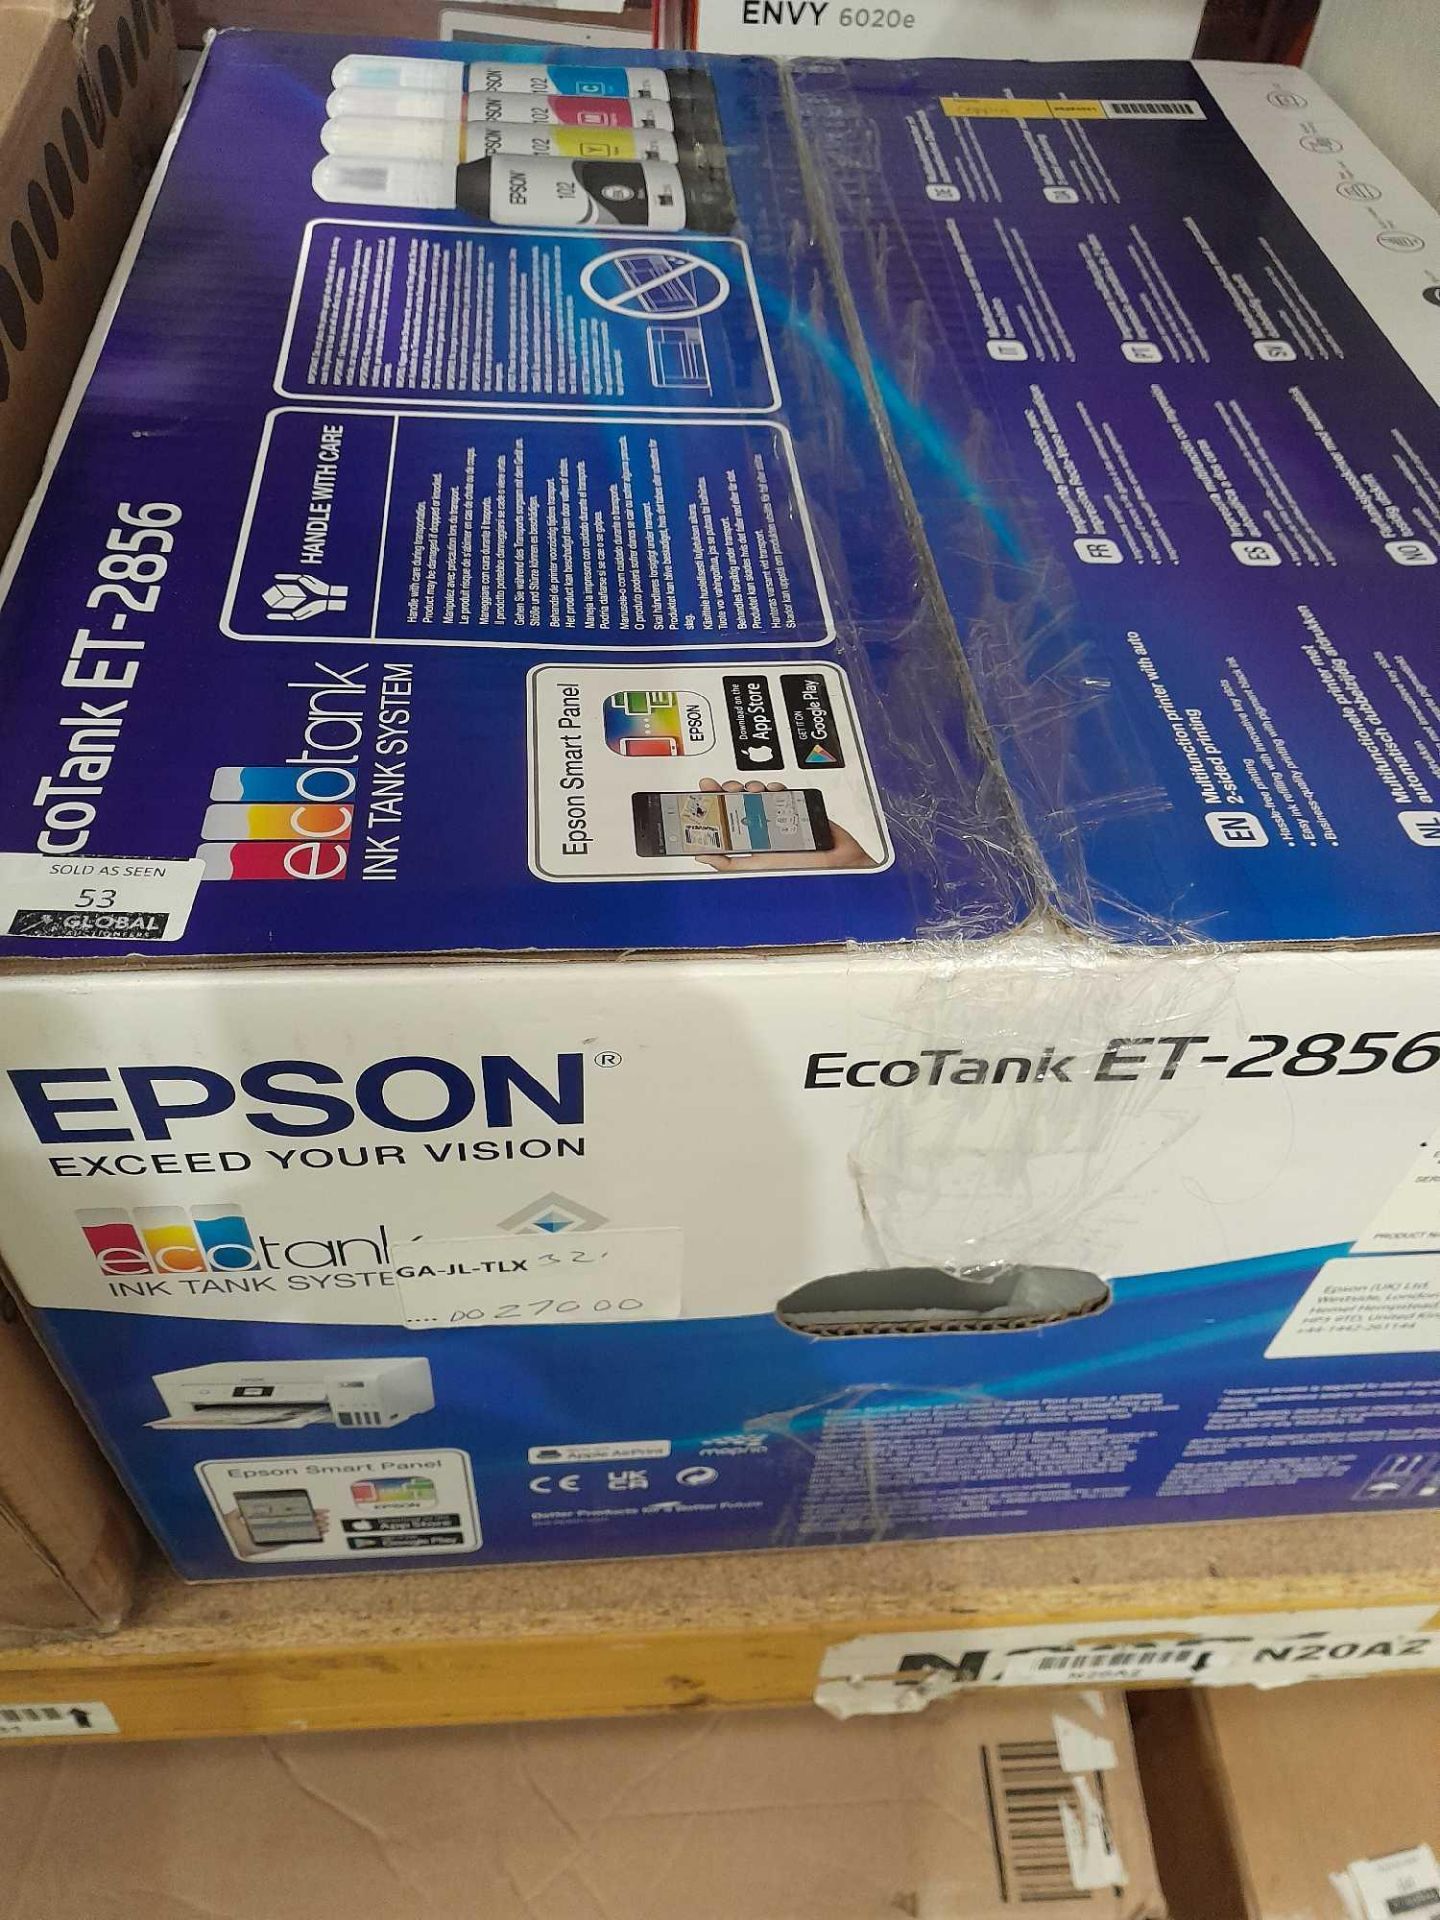 RRP £270 Boxed Epson Ecotank Et-2856 Wireless Printer - Image 2 of 2